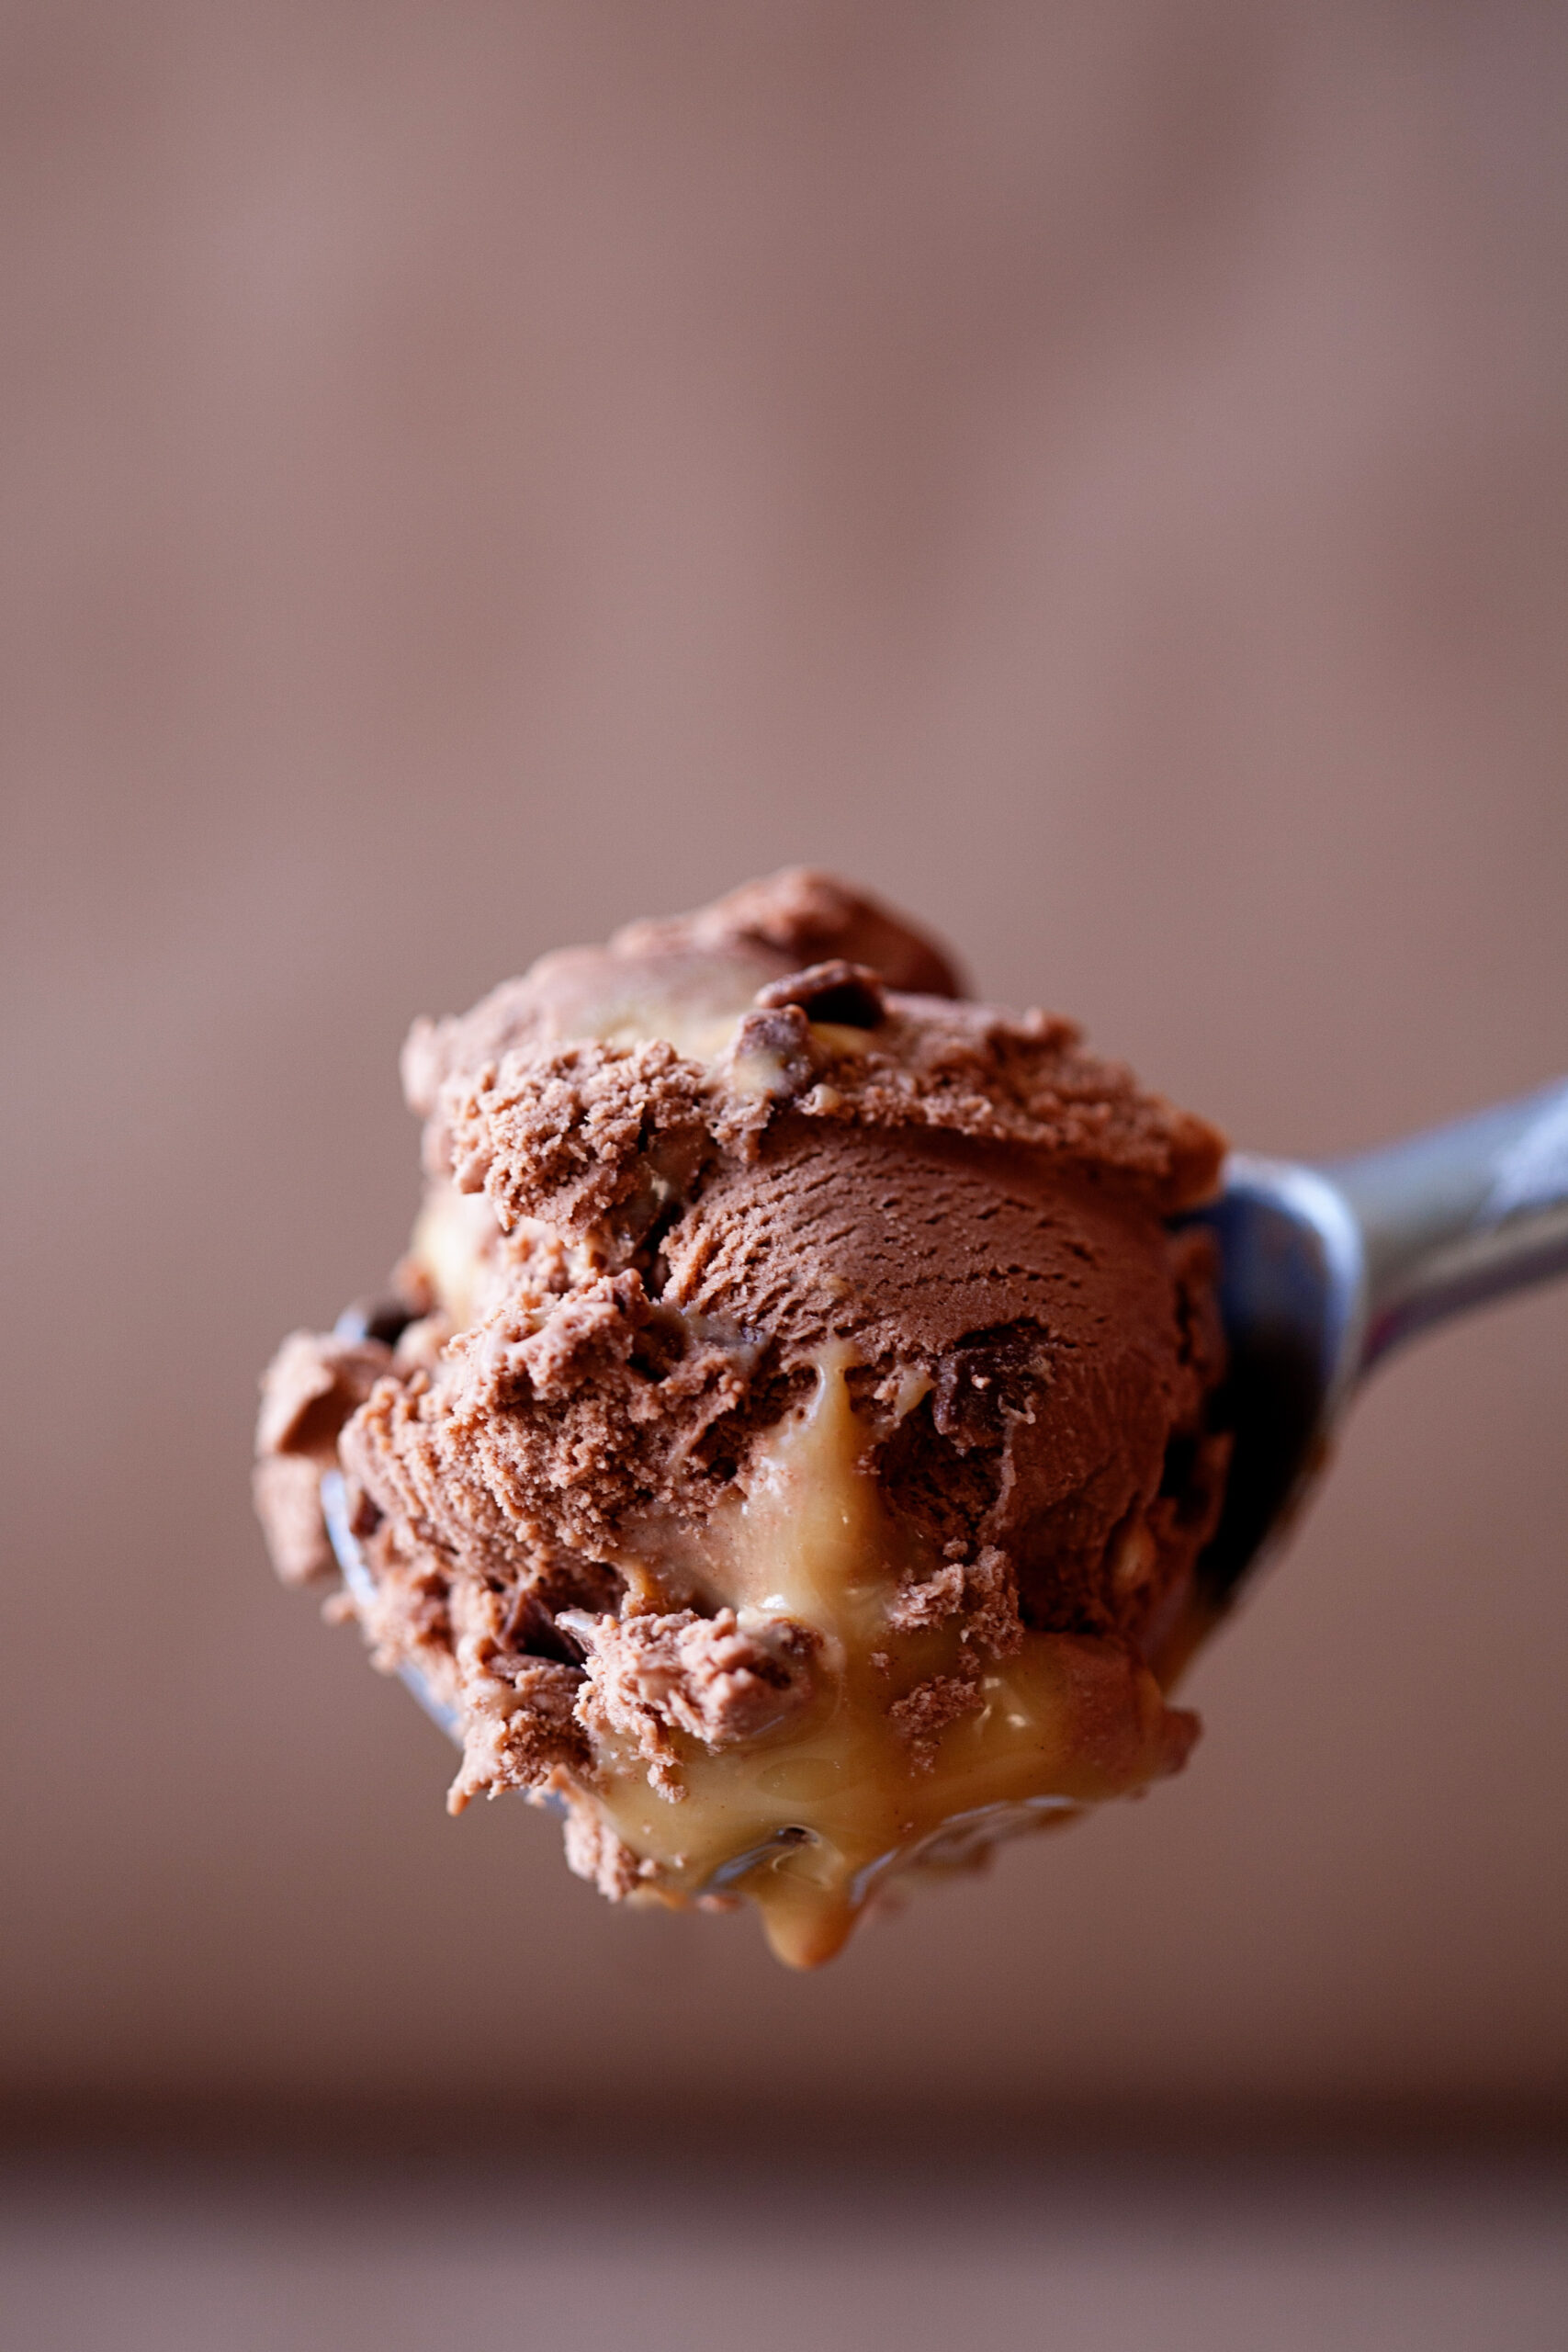 Chocolate Caramel Toffee Ice Cream in the Ice Cream Inspiration Cookbook